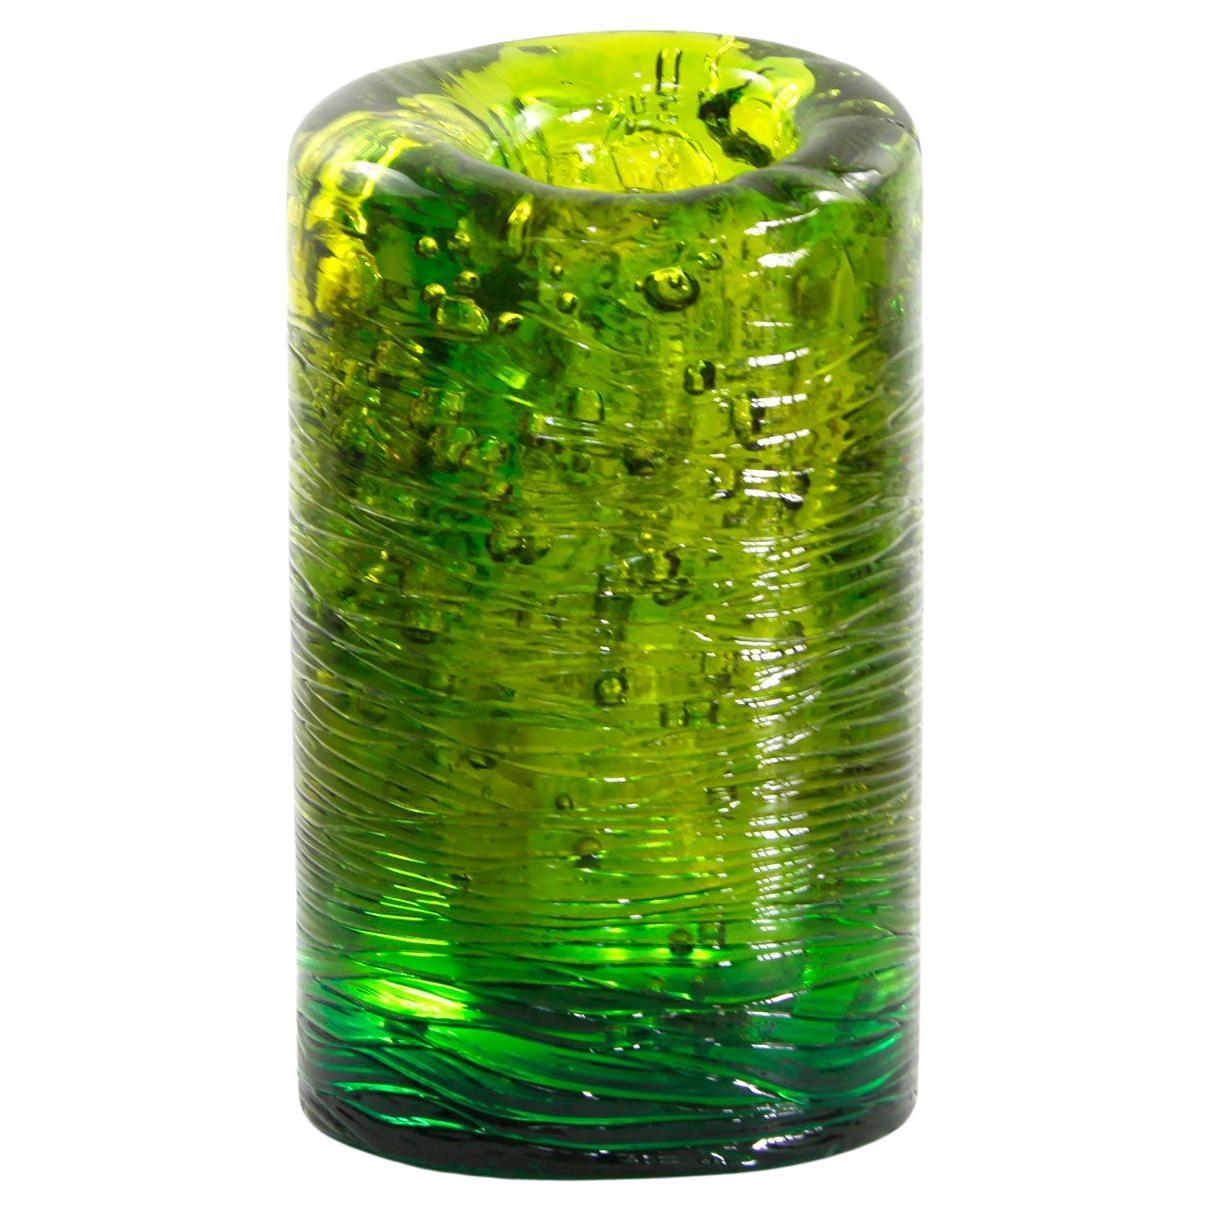 Grand vase contemporain Jungle, en vert citron monochrome, de Jacopo Foggini en vente